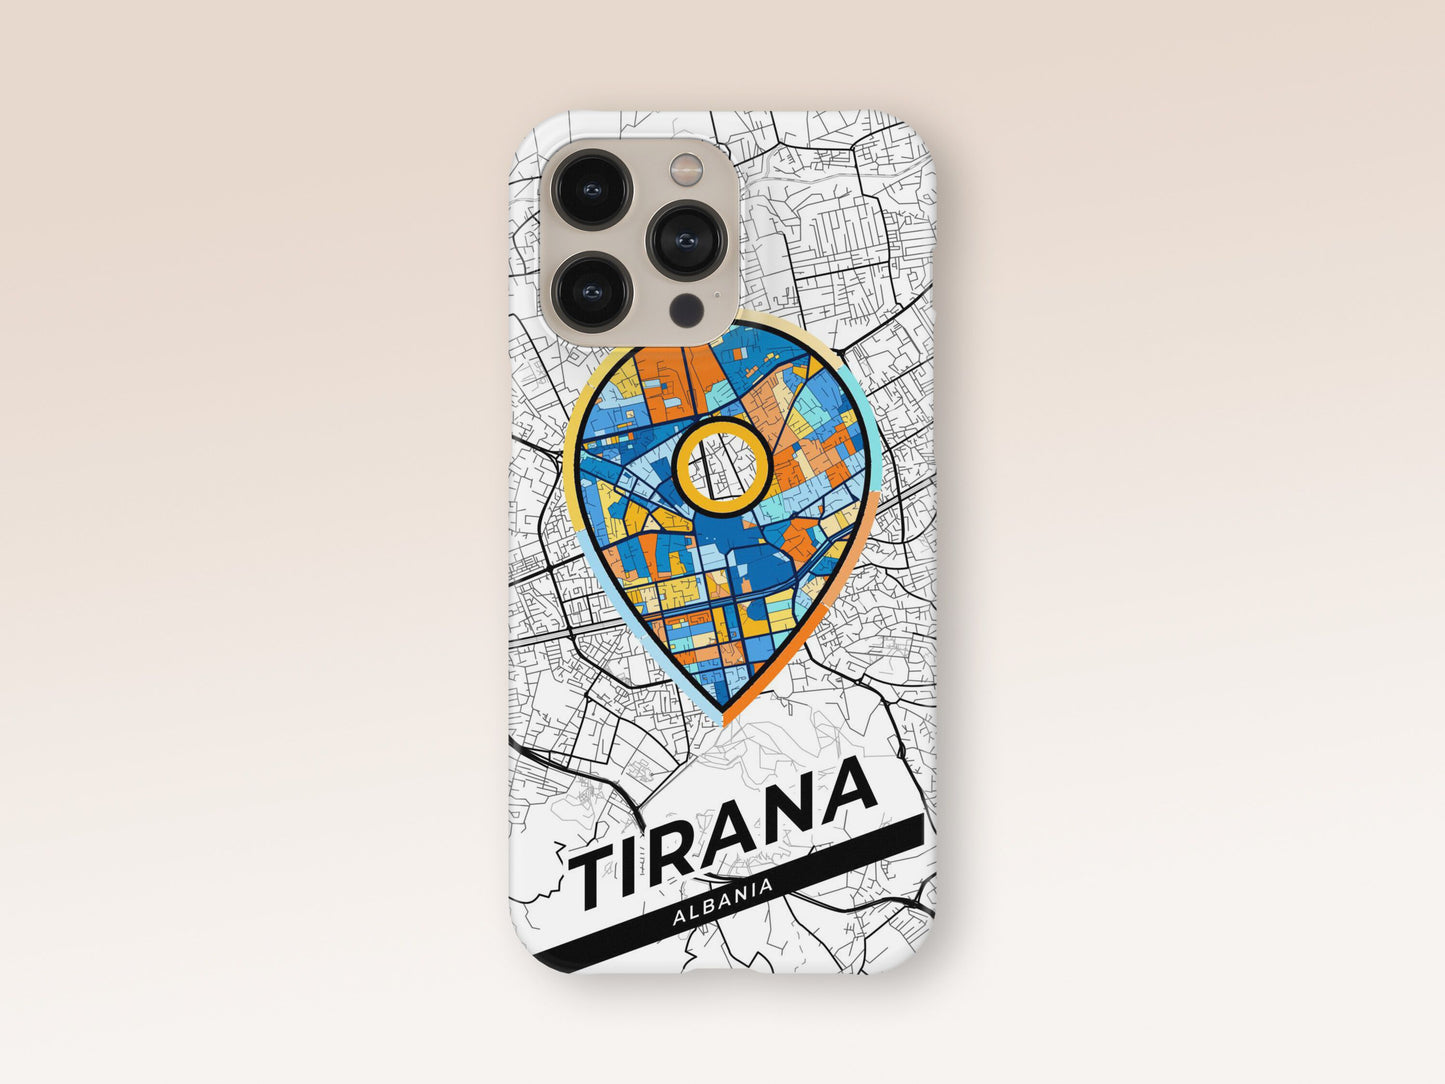 Tirana Albania slim phone case with colorful icon. Birthday, wedding or housewarming gift. Couple match cases. 1